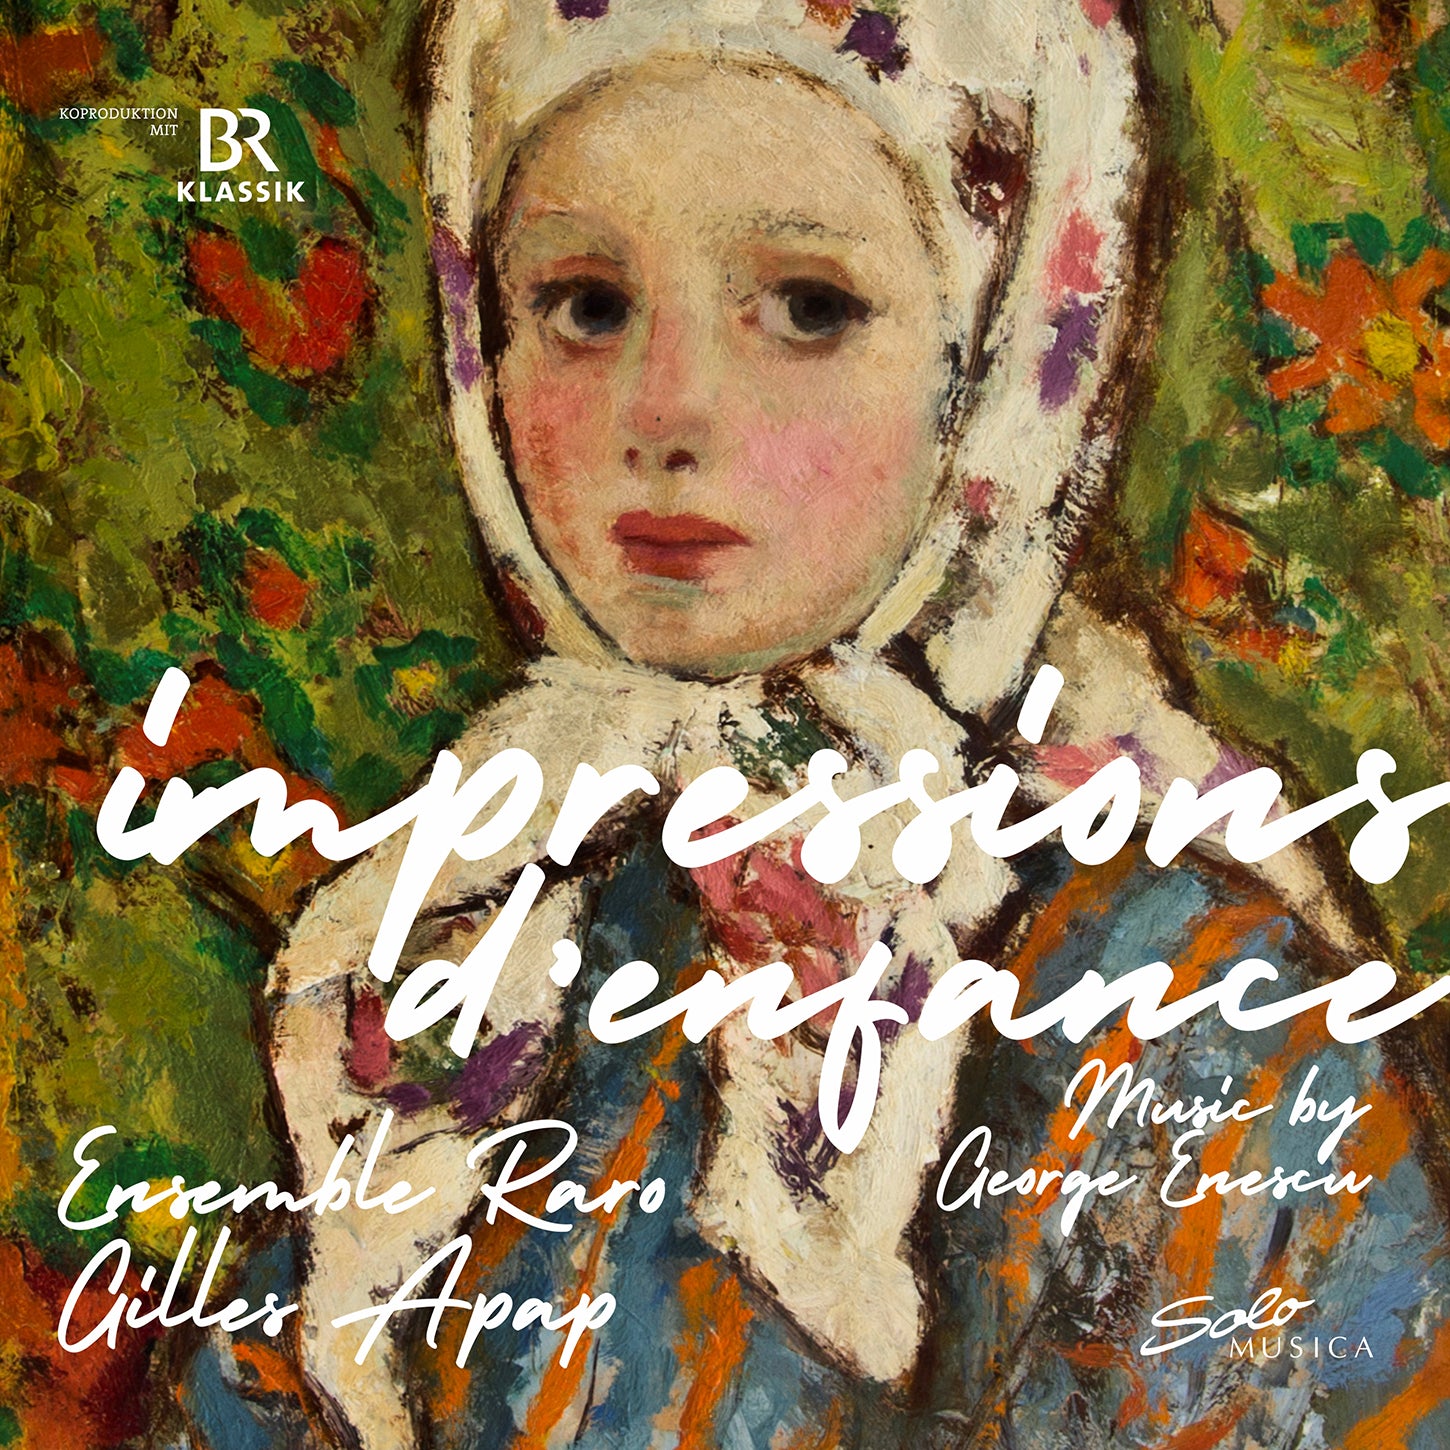 Enescu: Impressions d'enfance / Ketler, Bezrodny, Apap, Ensemble Raro